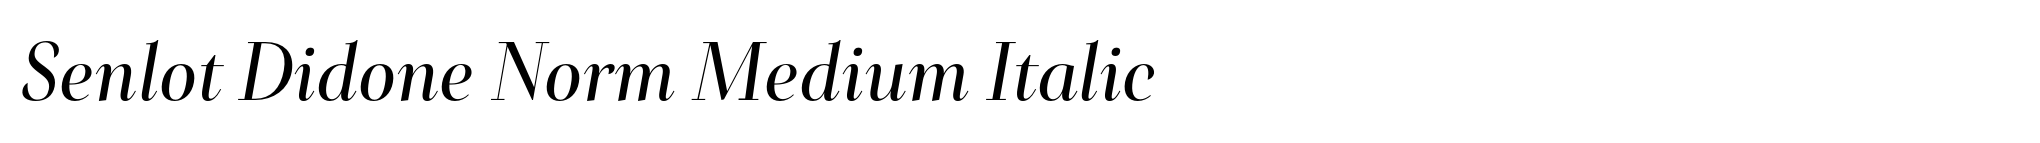 Senlot Didone Norm Medium Italic image